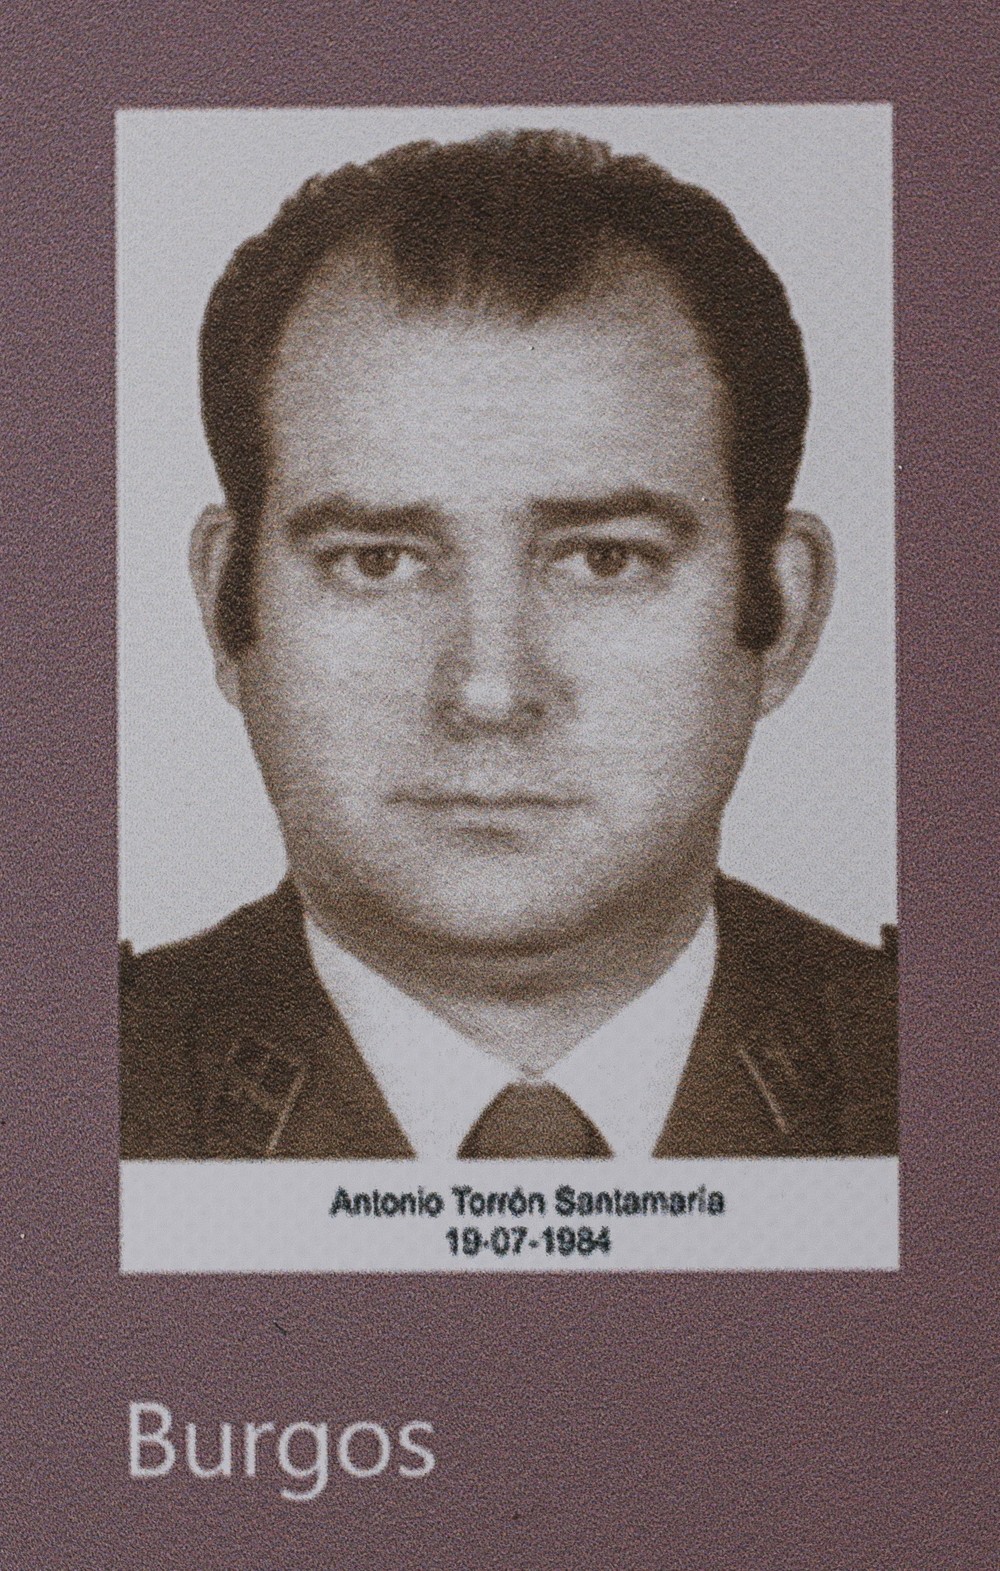 Antonio Torrón